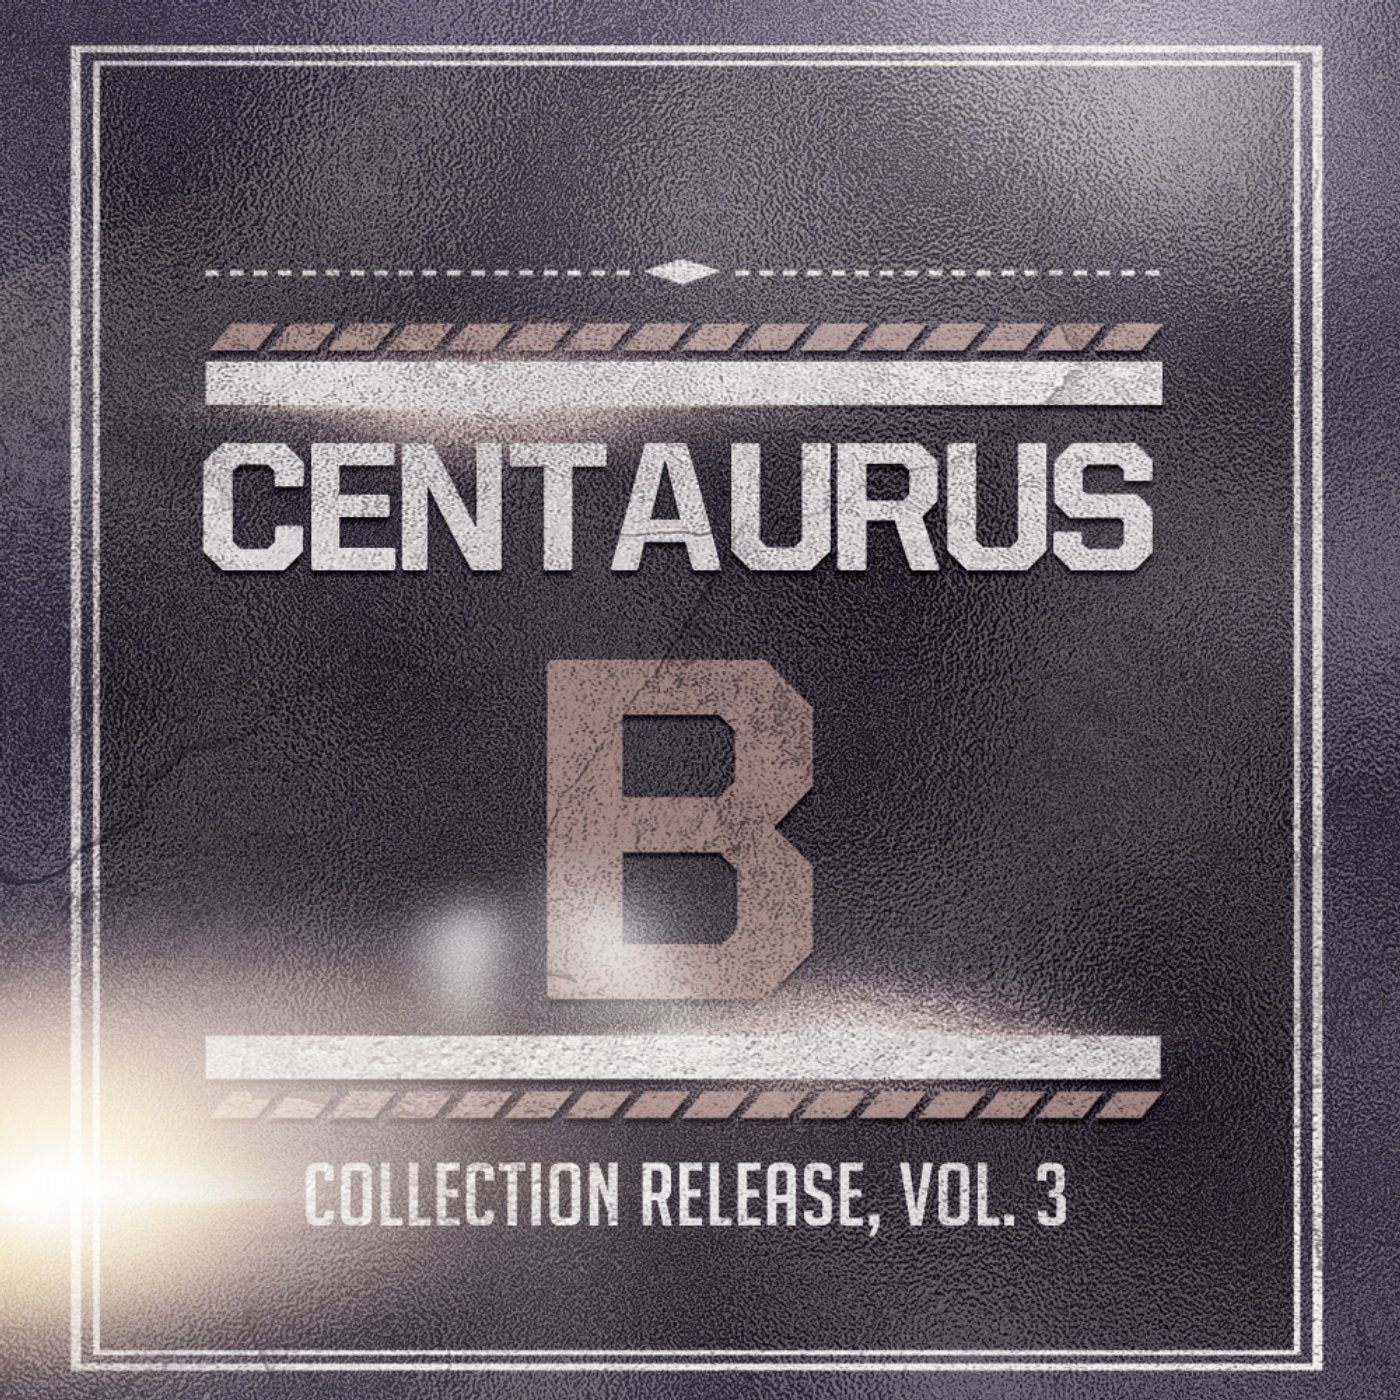 Centaurus B: Collection Release, Vol. 3